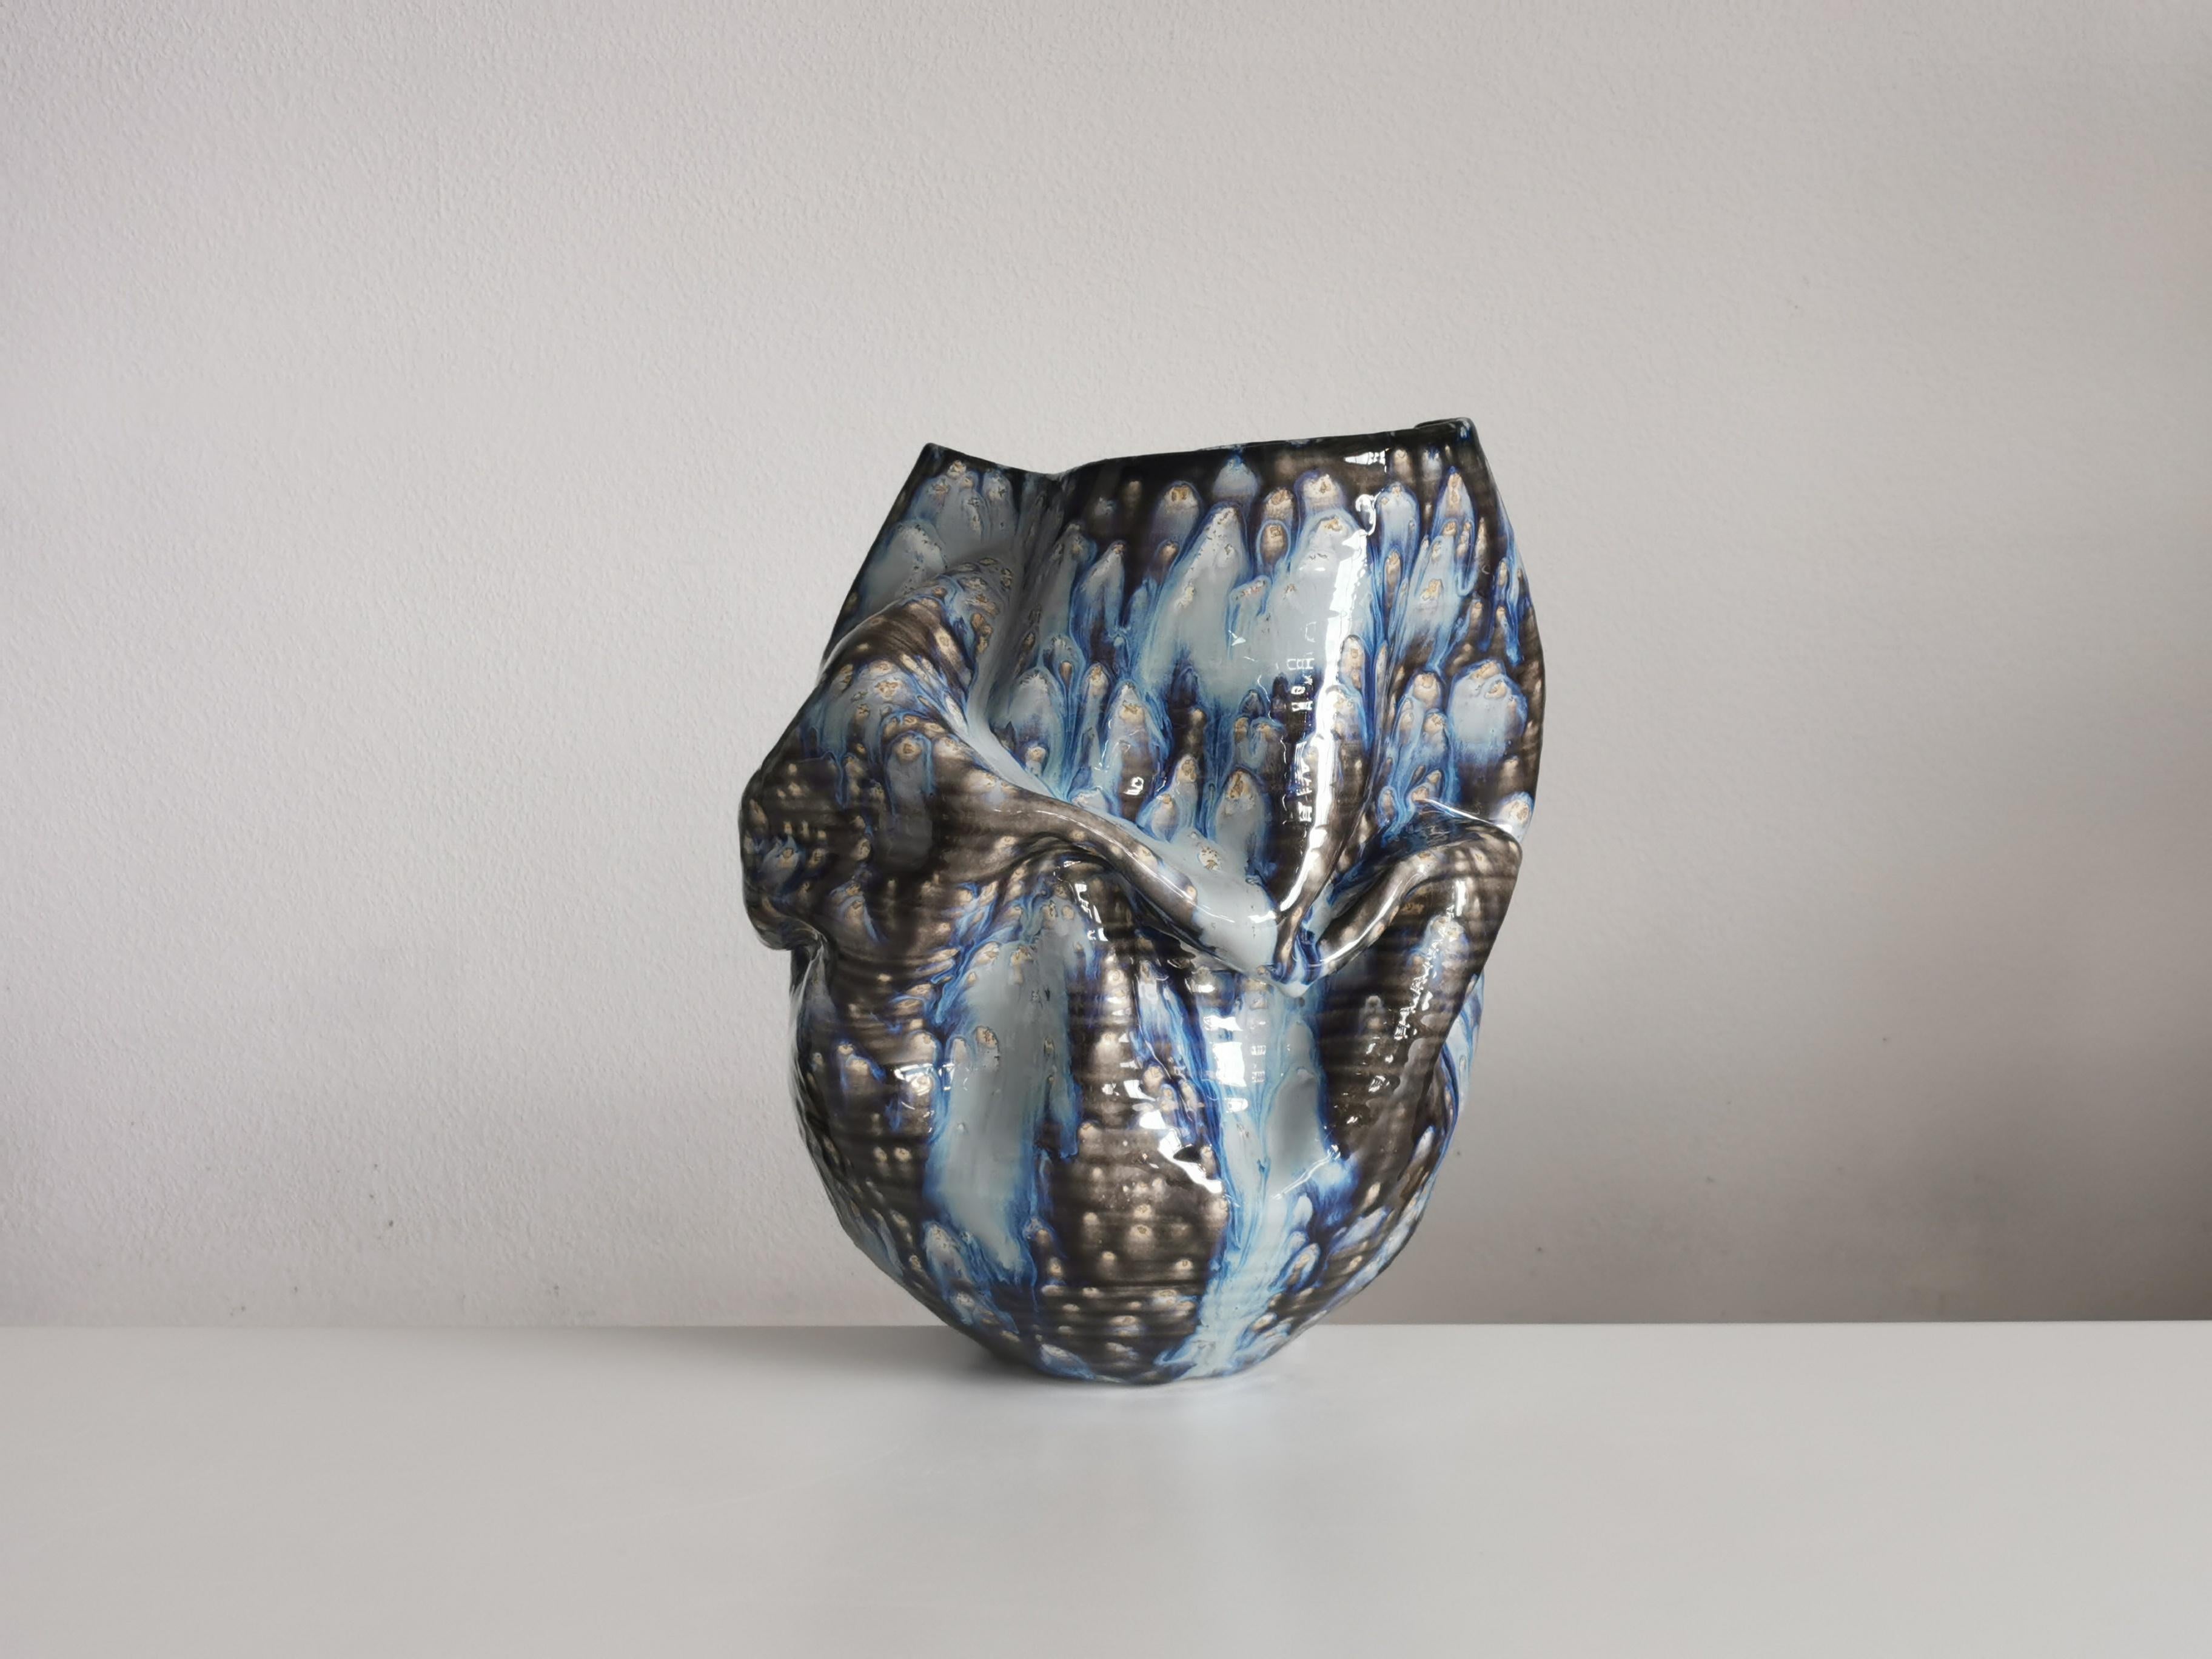 Spanish Medium Undulating Form Galaxy Blue Glaze, Unique Ceramic Sculpture Vessel N.78